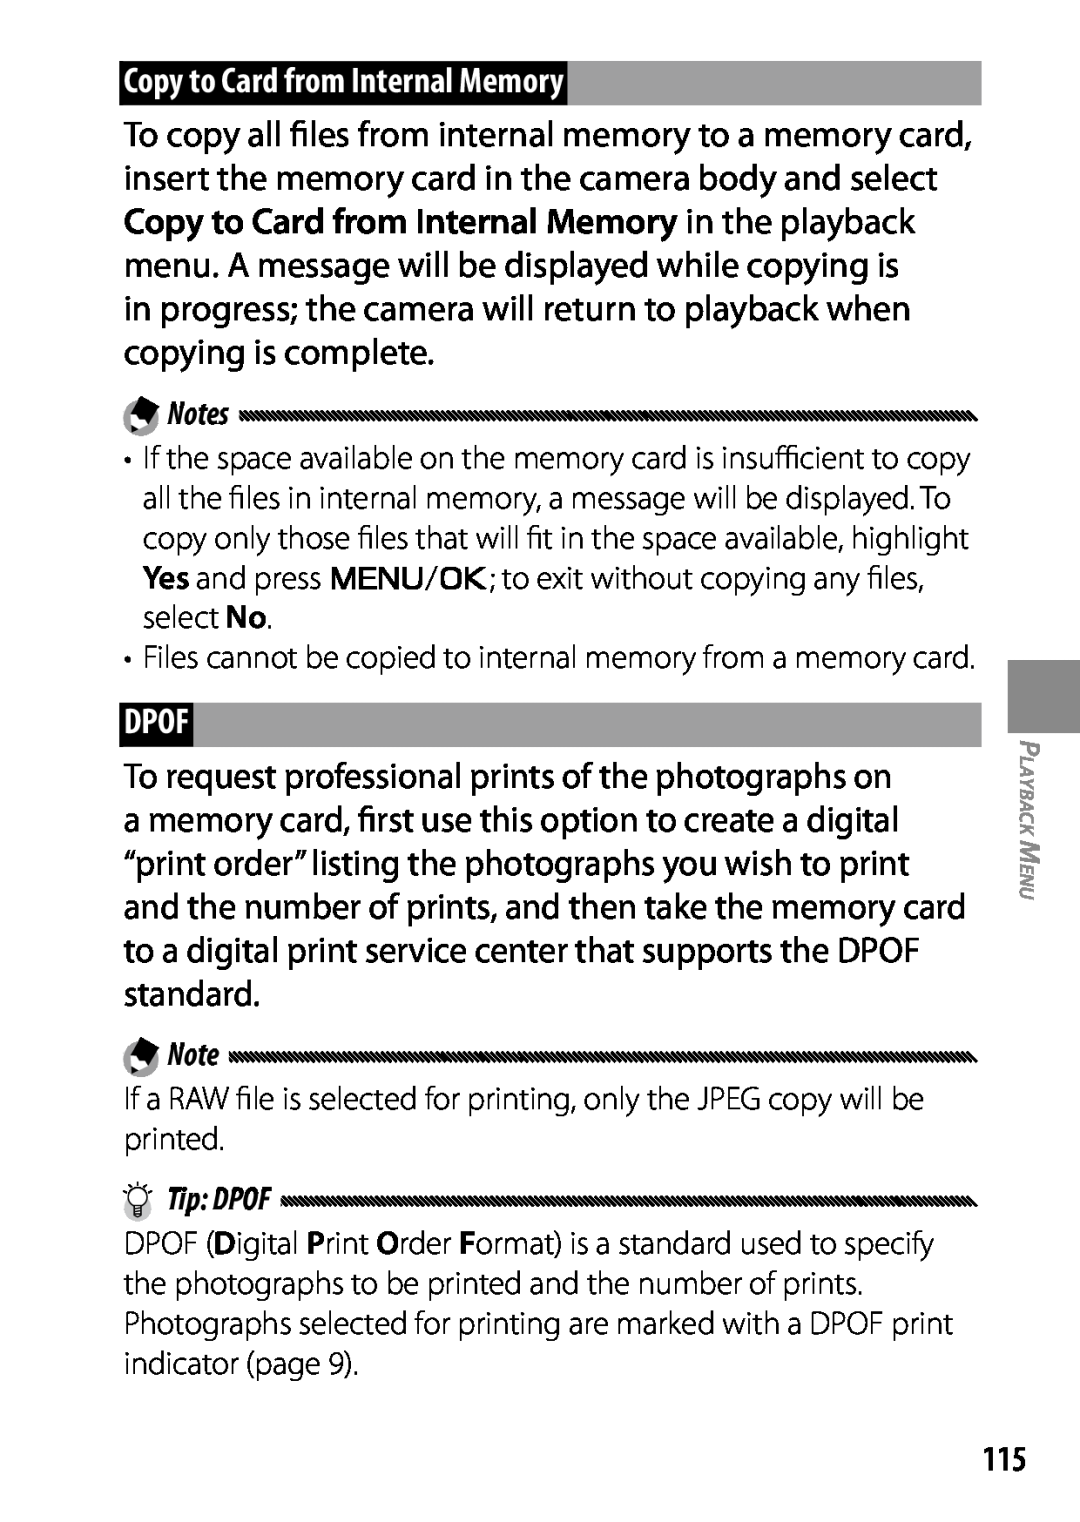 Ricoh 170543, GXR, 170553 manual Copy to Card from Internal Memory, Dpof, Tip DPOF 